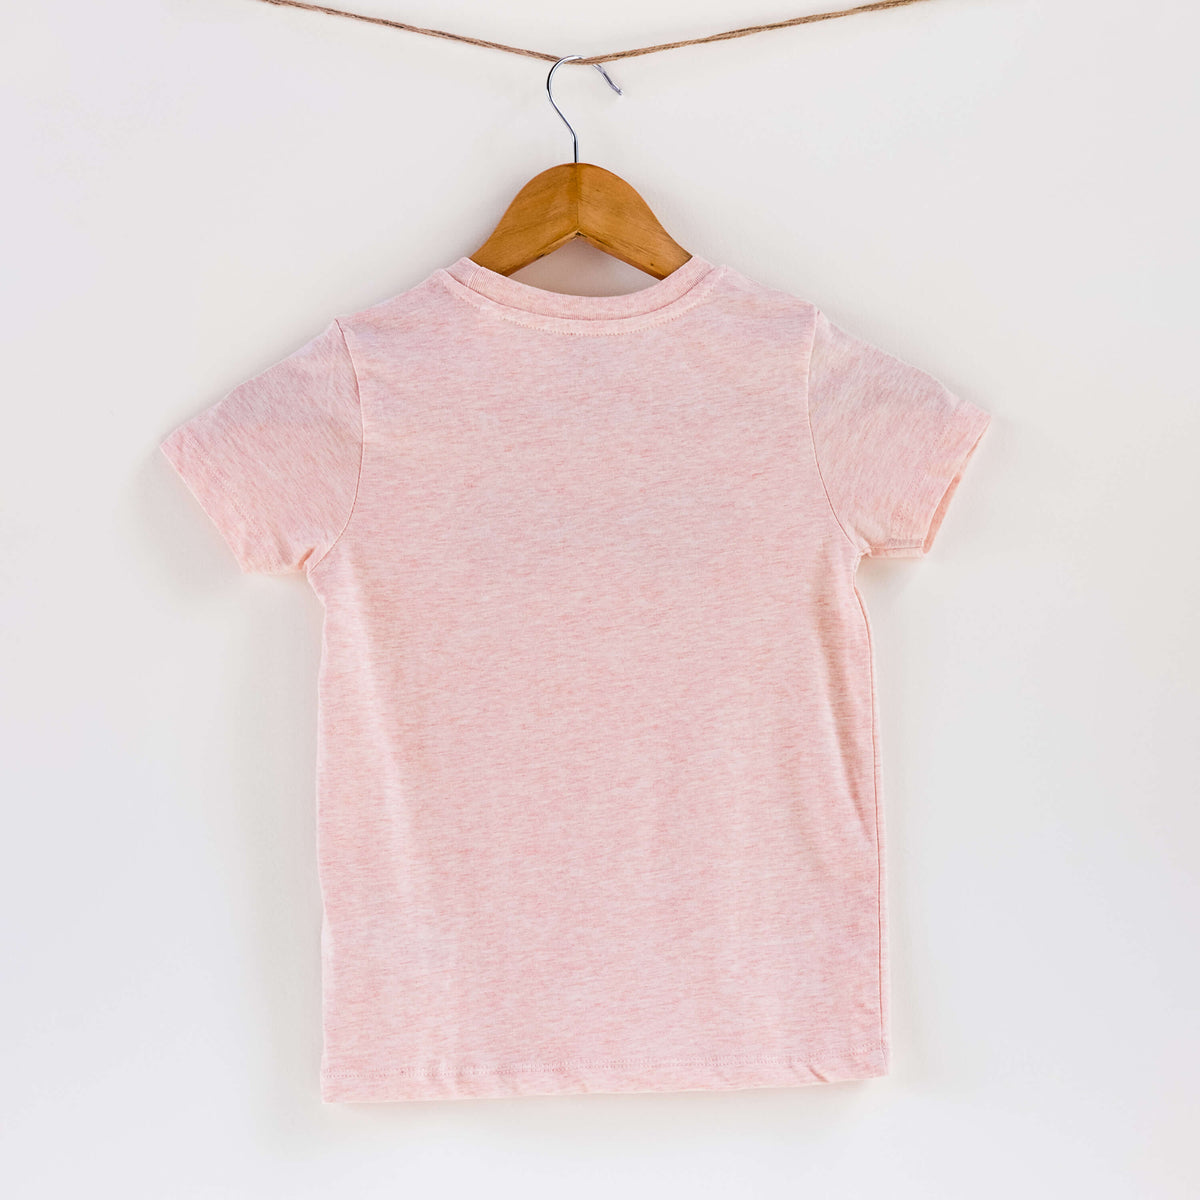 Camiseta rosa de algodón orgánico para niños, estampado a mano con tintas ecológicas. Modelo unisex.